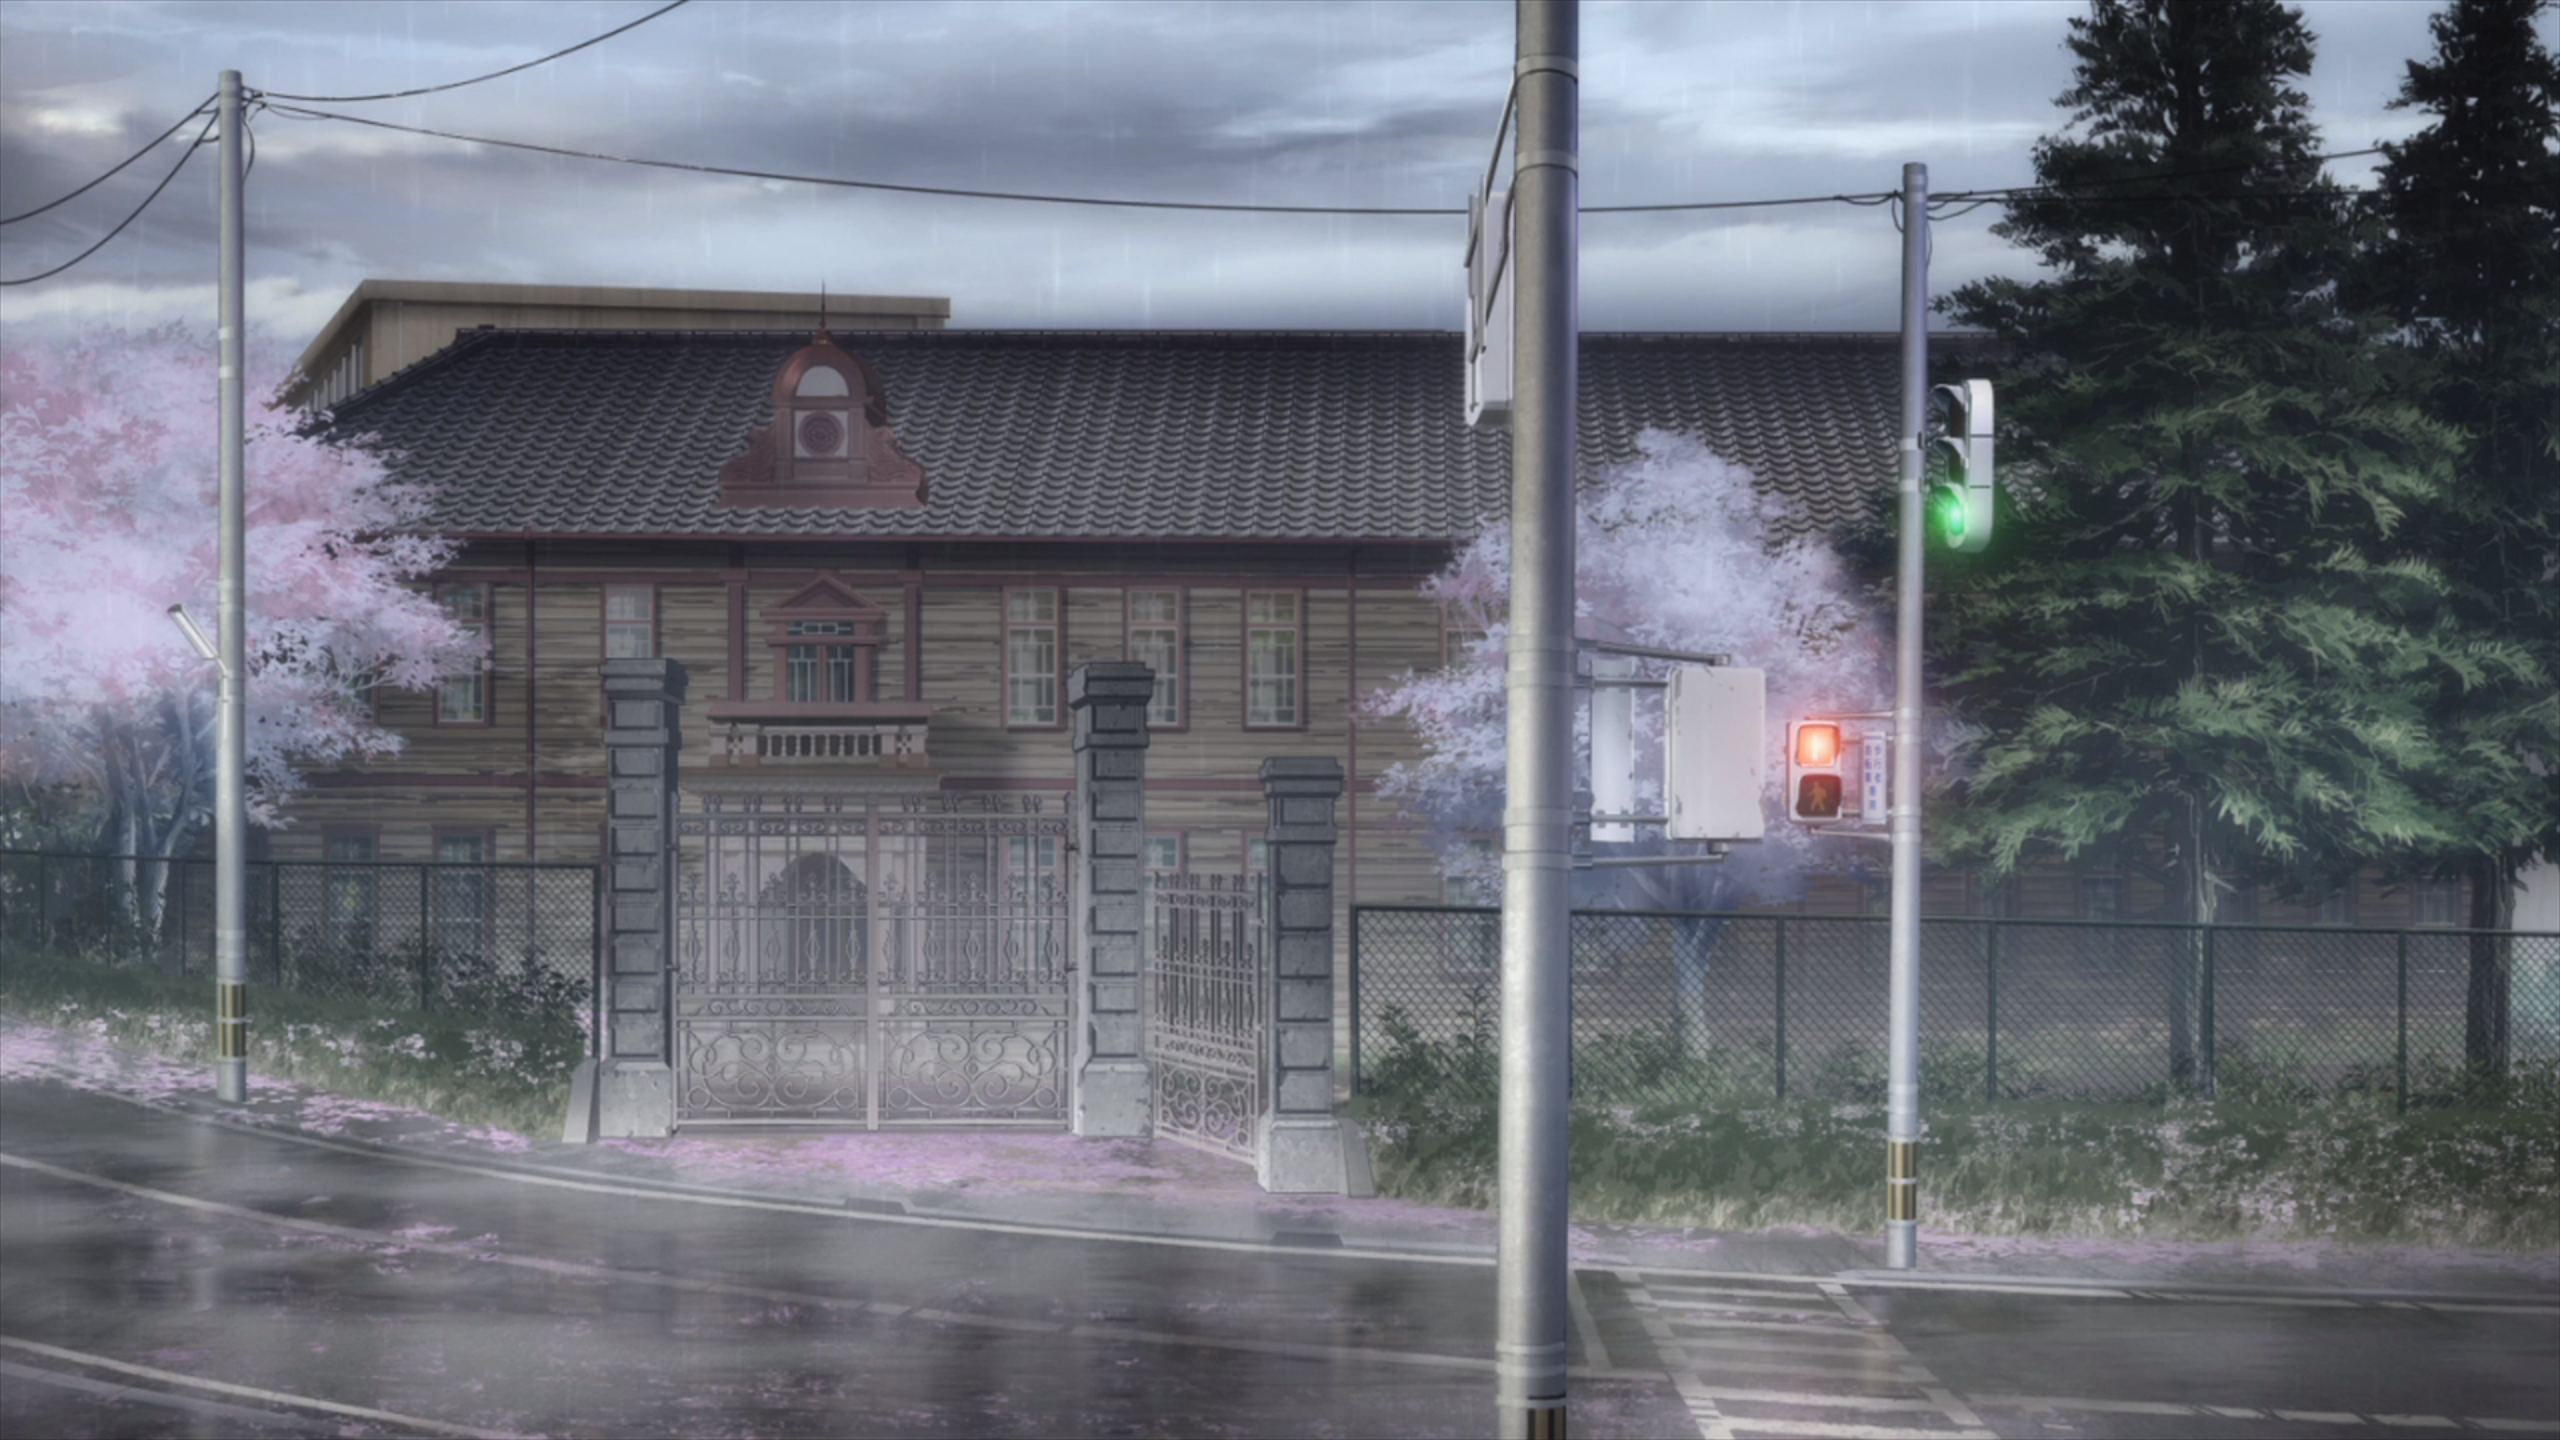 Another Yomiyama Horror Street Anime Anime Screenshot Pedestrian Bridge Street Light Sky Clouds Buil 2560x1440